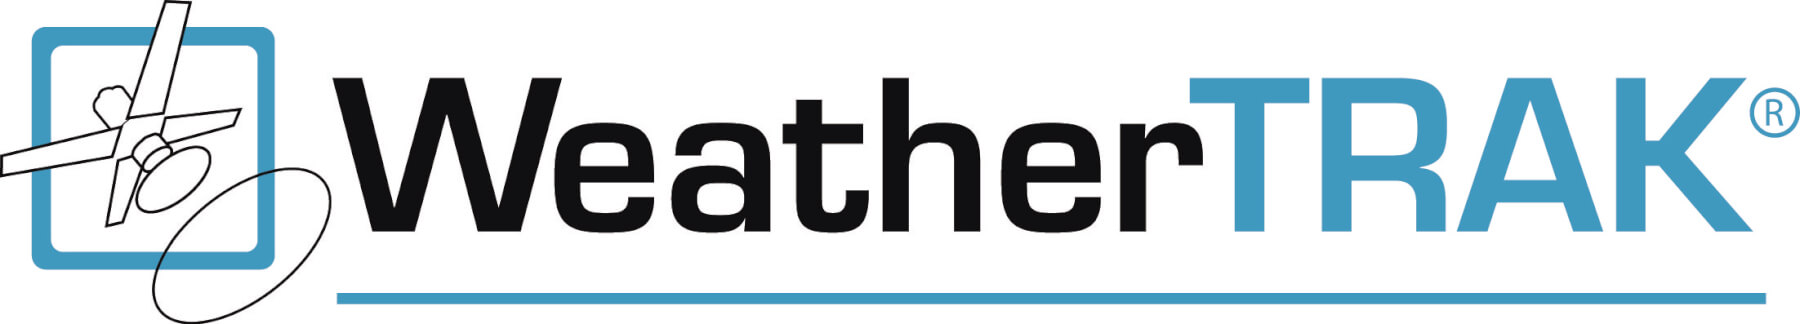 WeatherTRAK logo_notagline